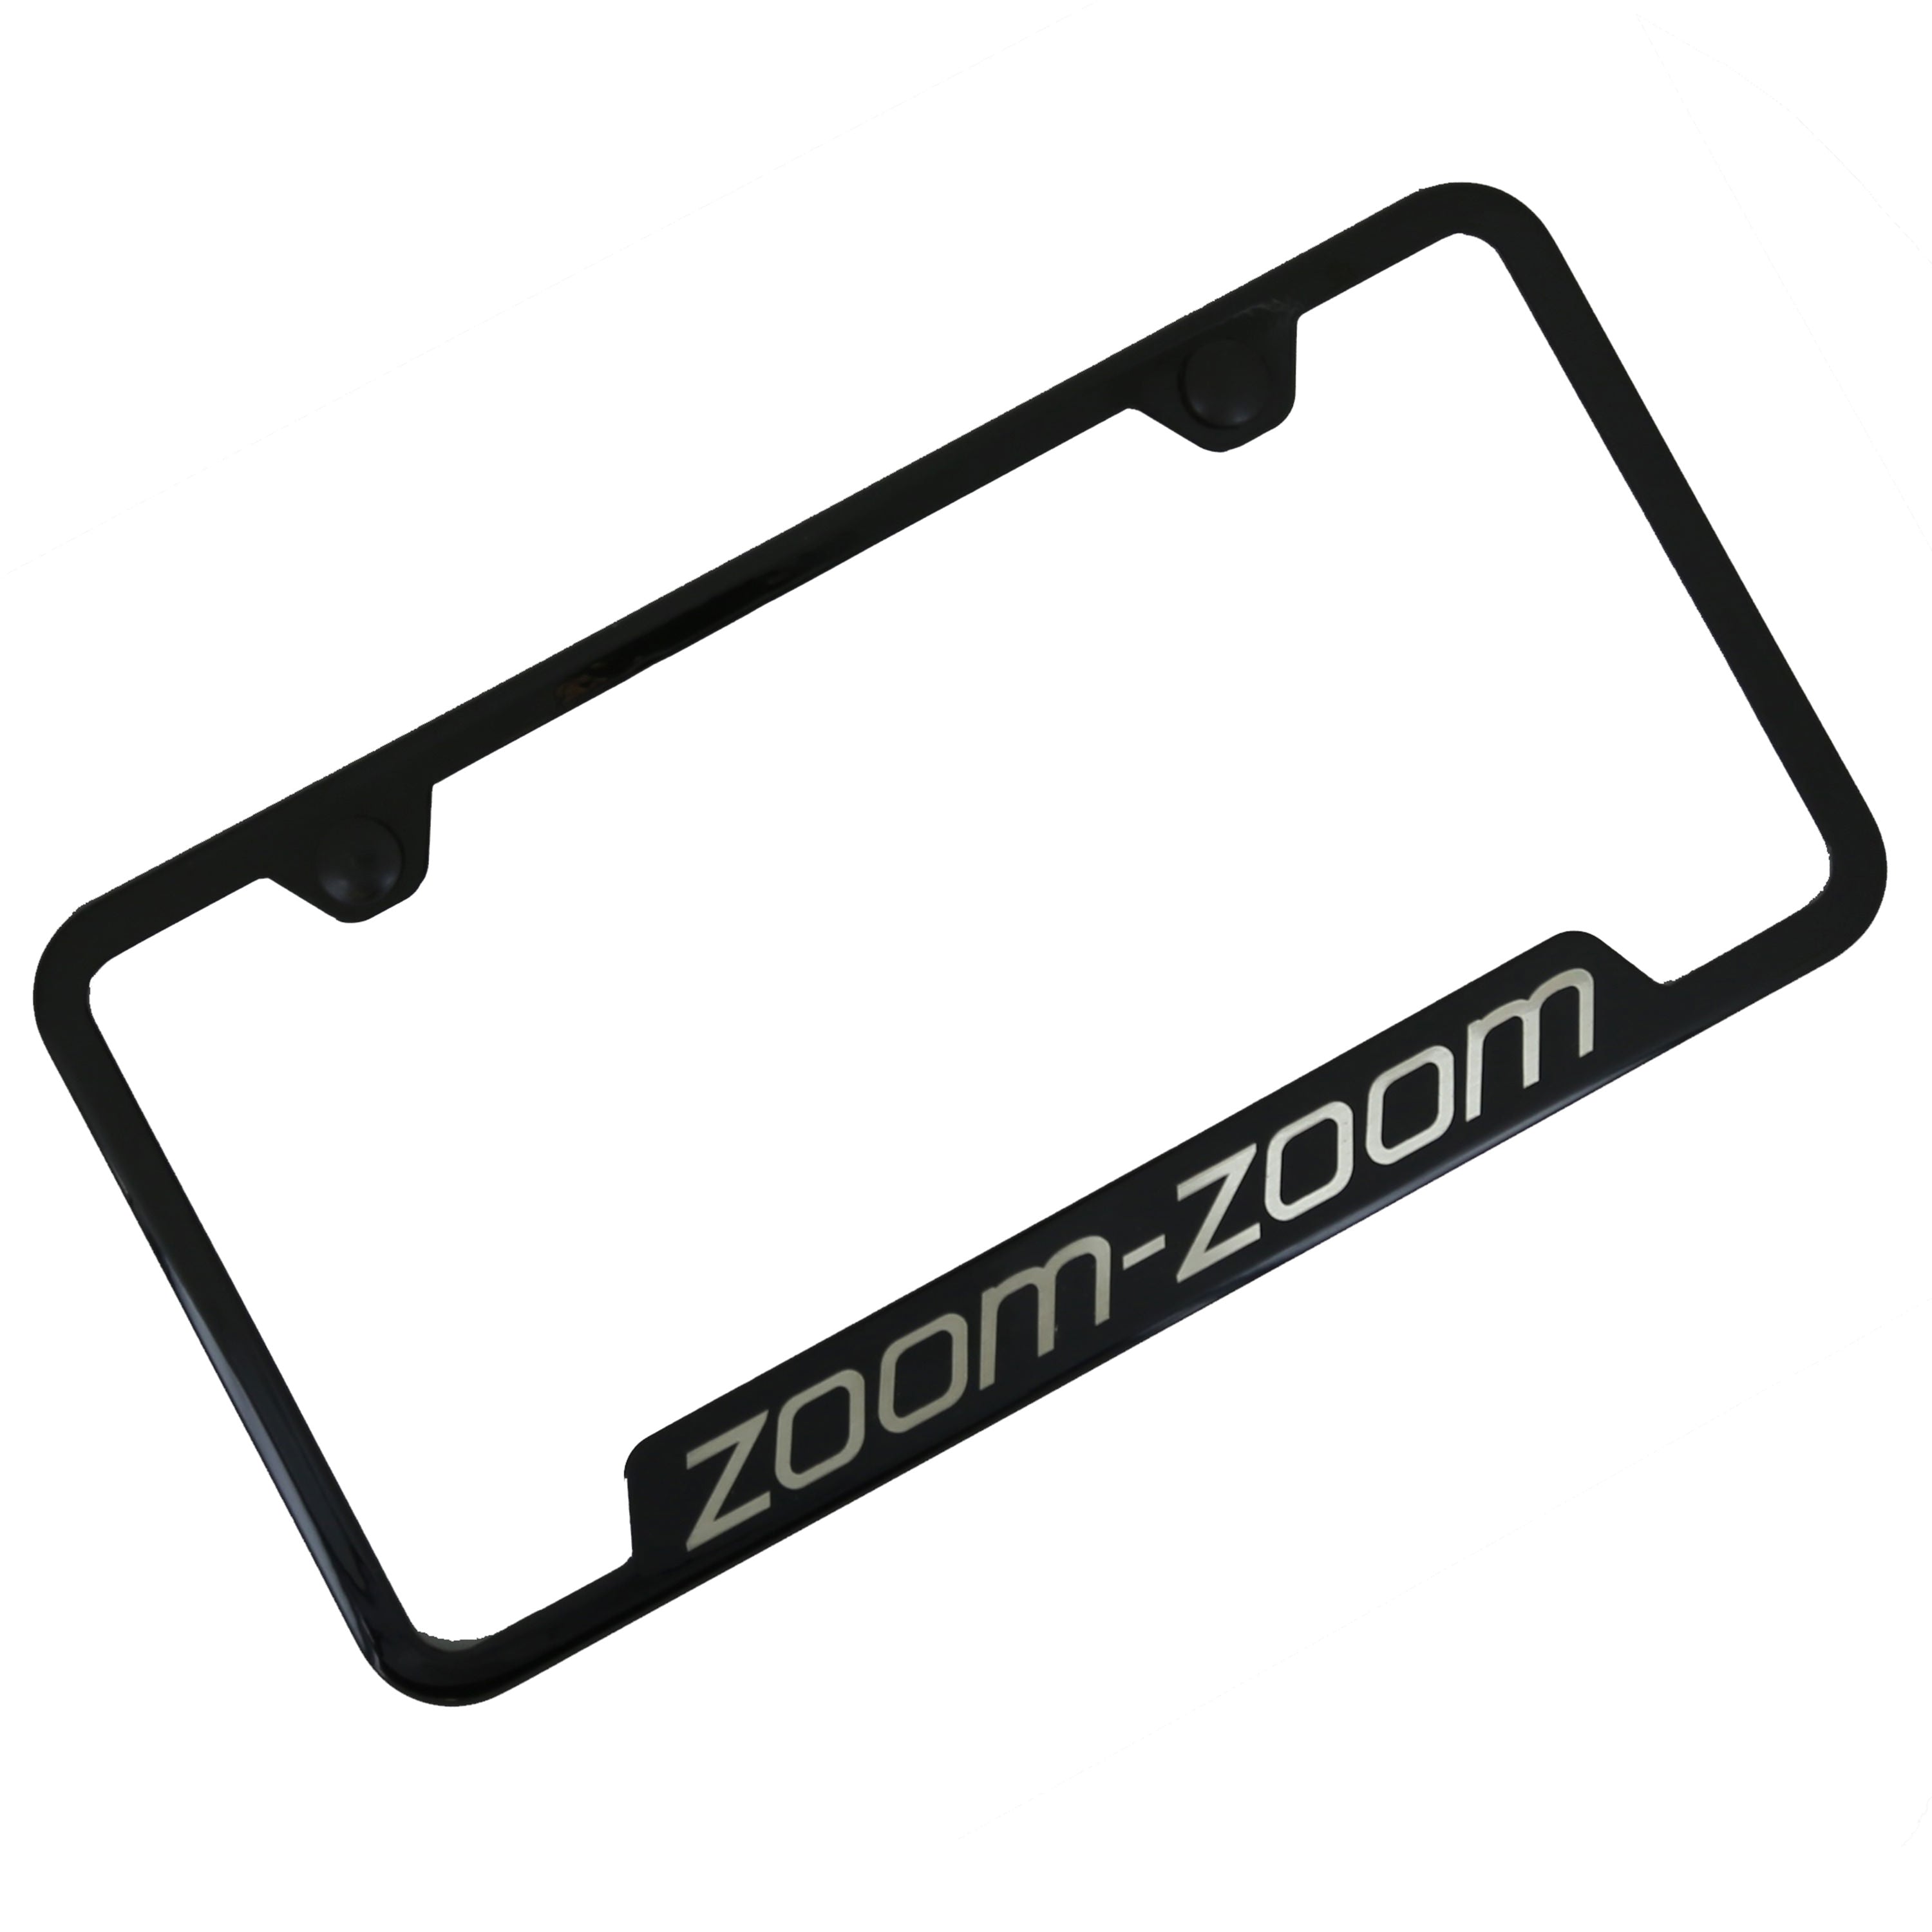 Mazda Zoom Zoom Cut Out License Plate Frame (Black) - Custom Werks